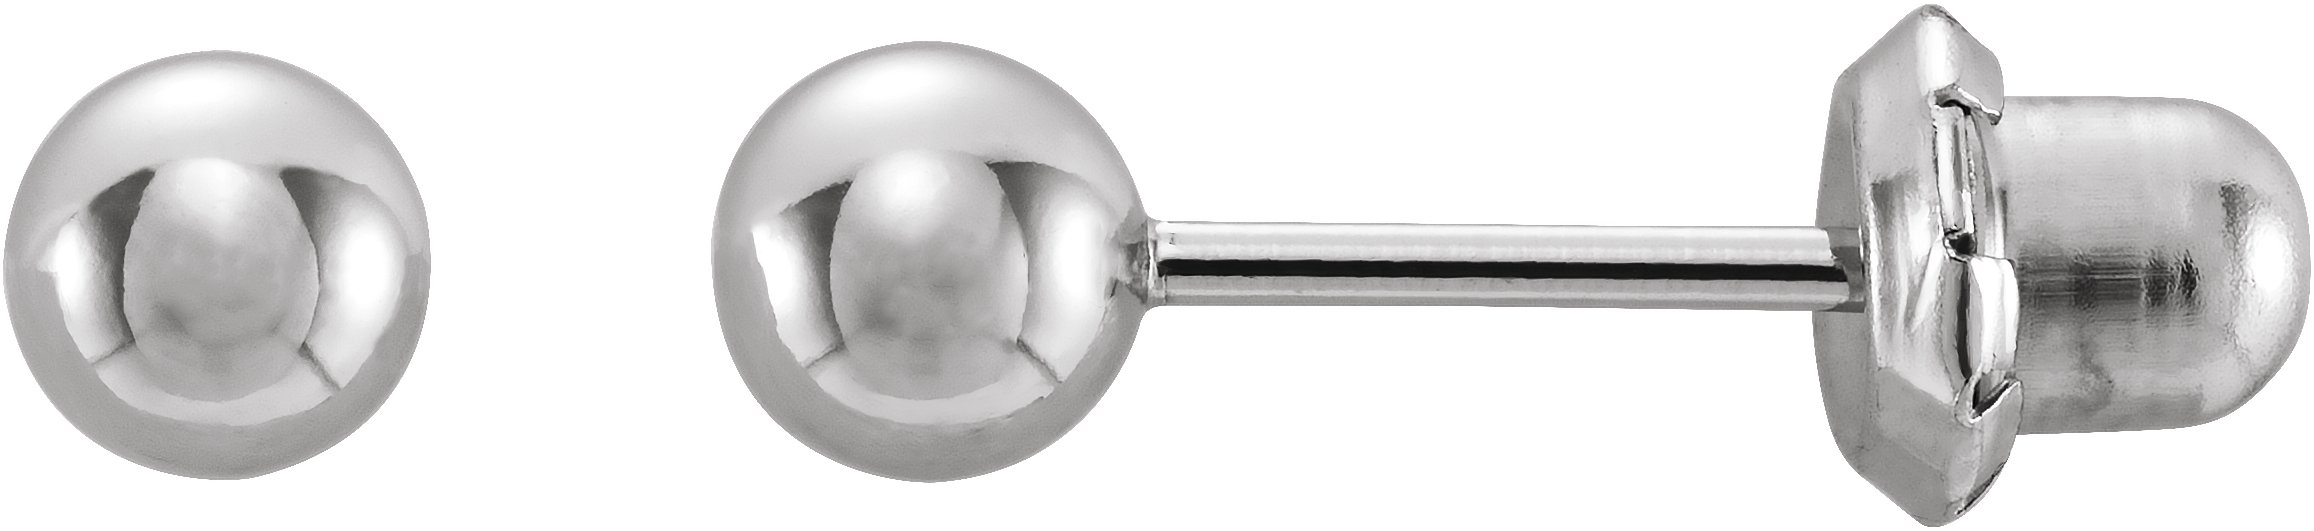 Stainless Steel 3 mm Ball Stud Piercing Earrings  